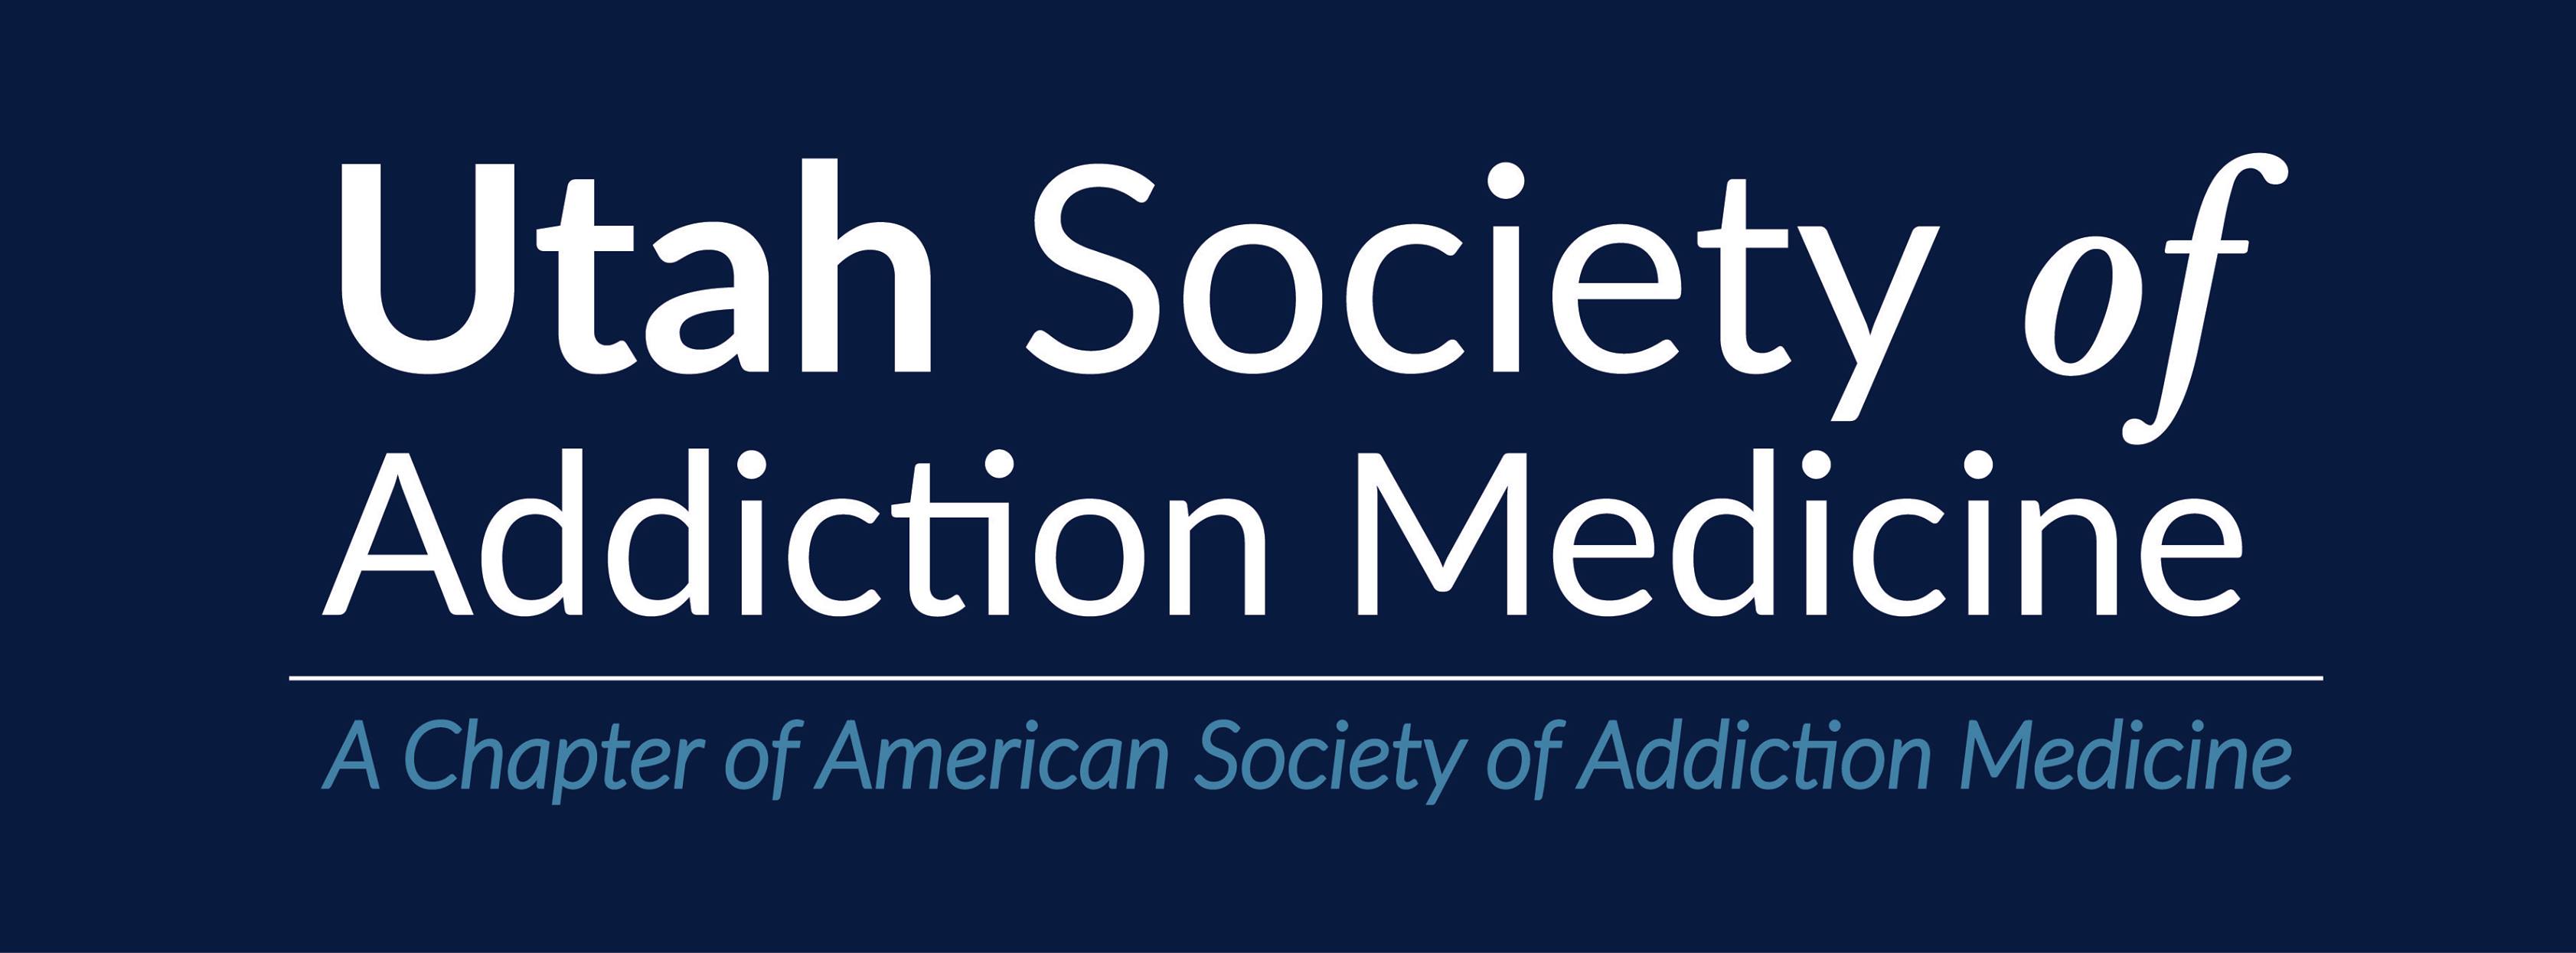 Utah Society of Addiction Medicine